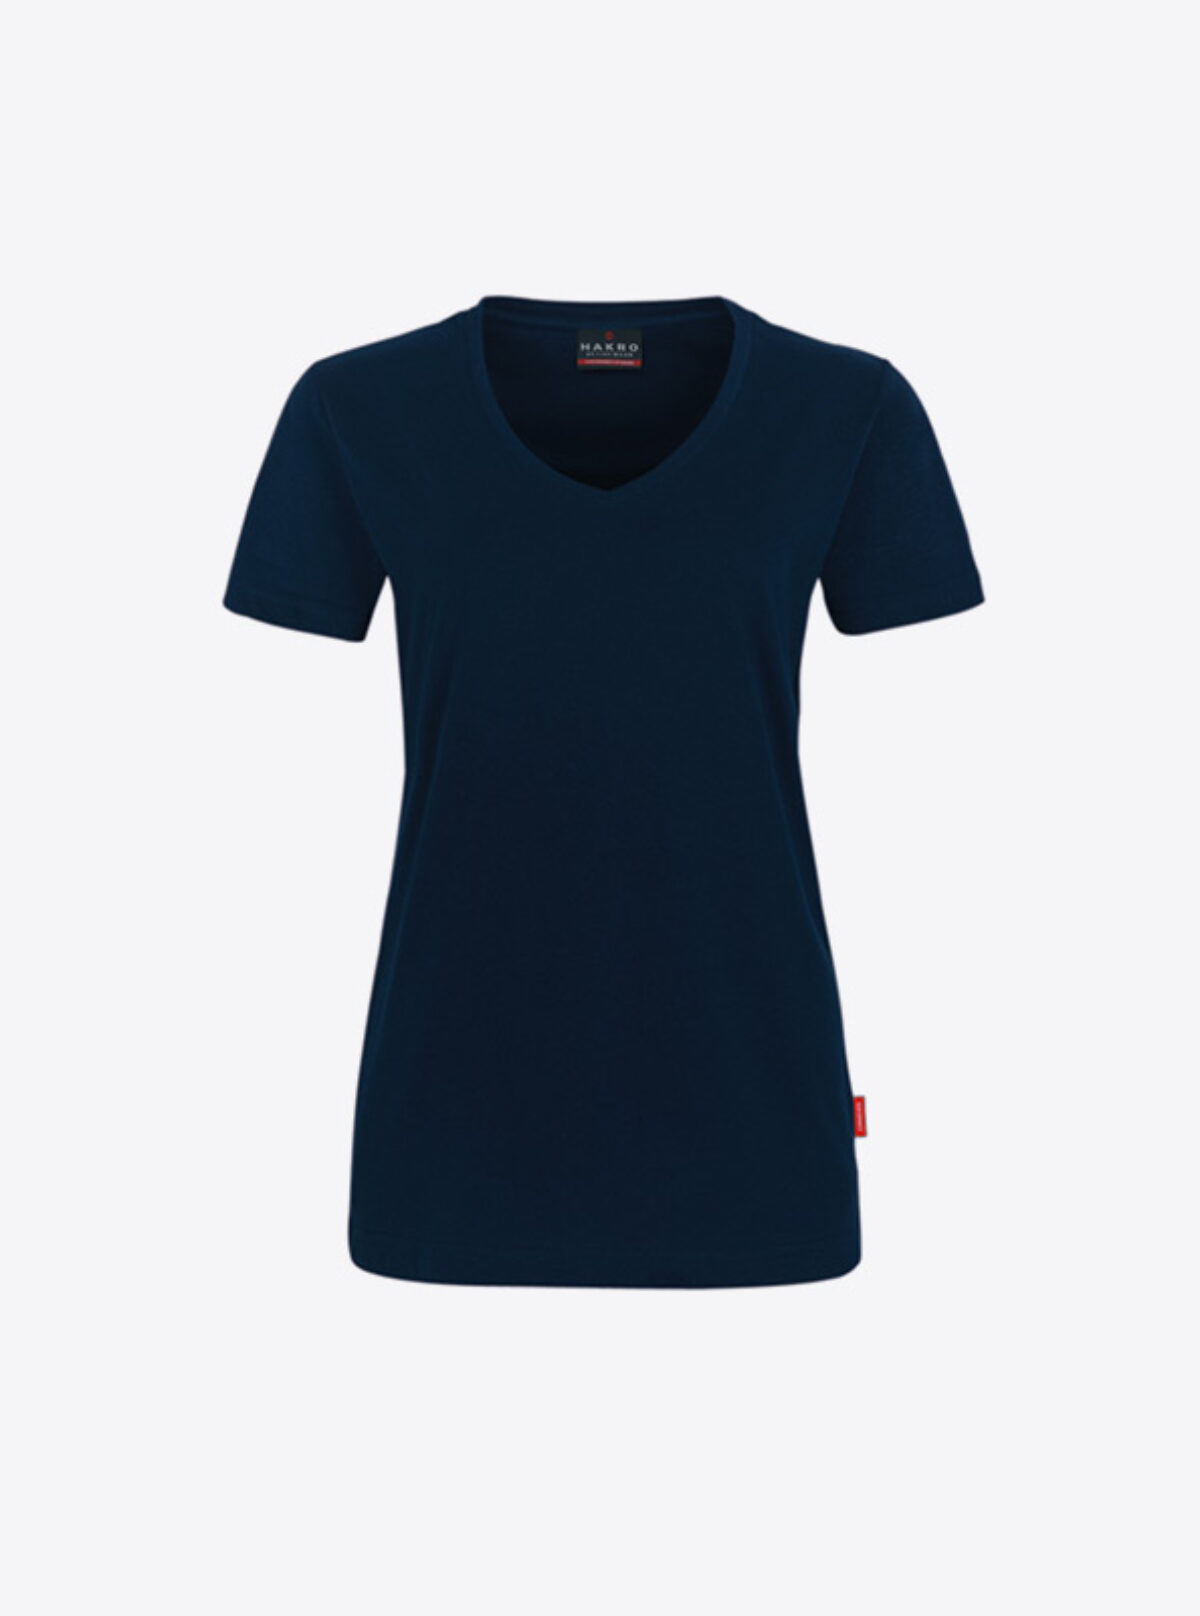 EXPAND 1401800 Damen Arbeits T-Shirt 010 royal blau M 